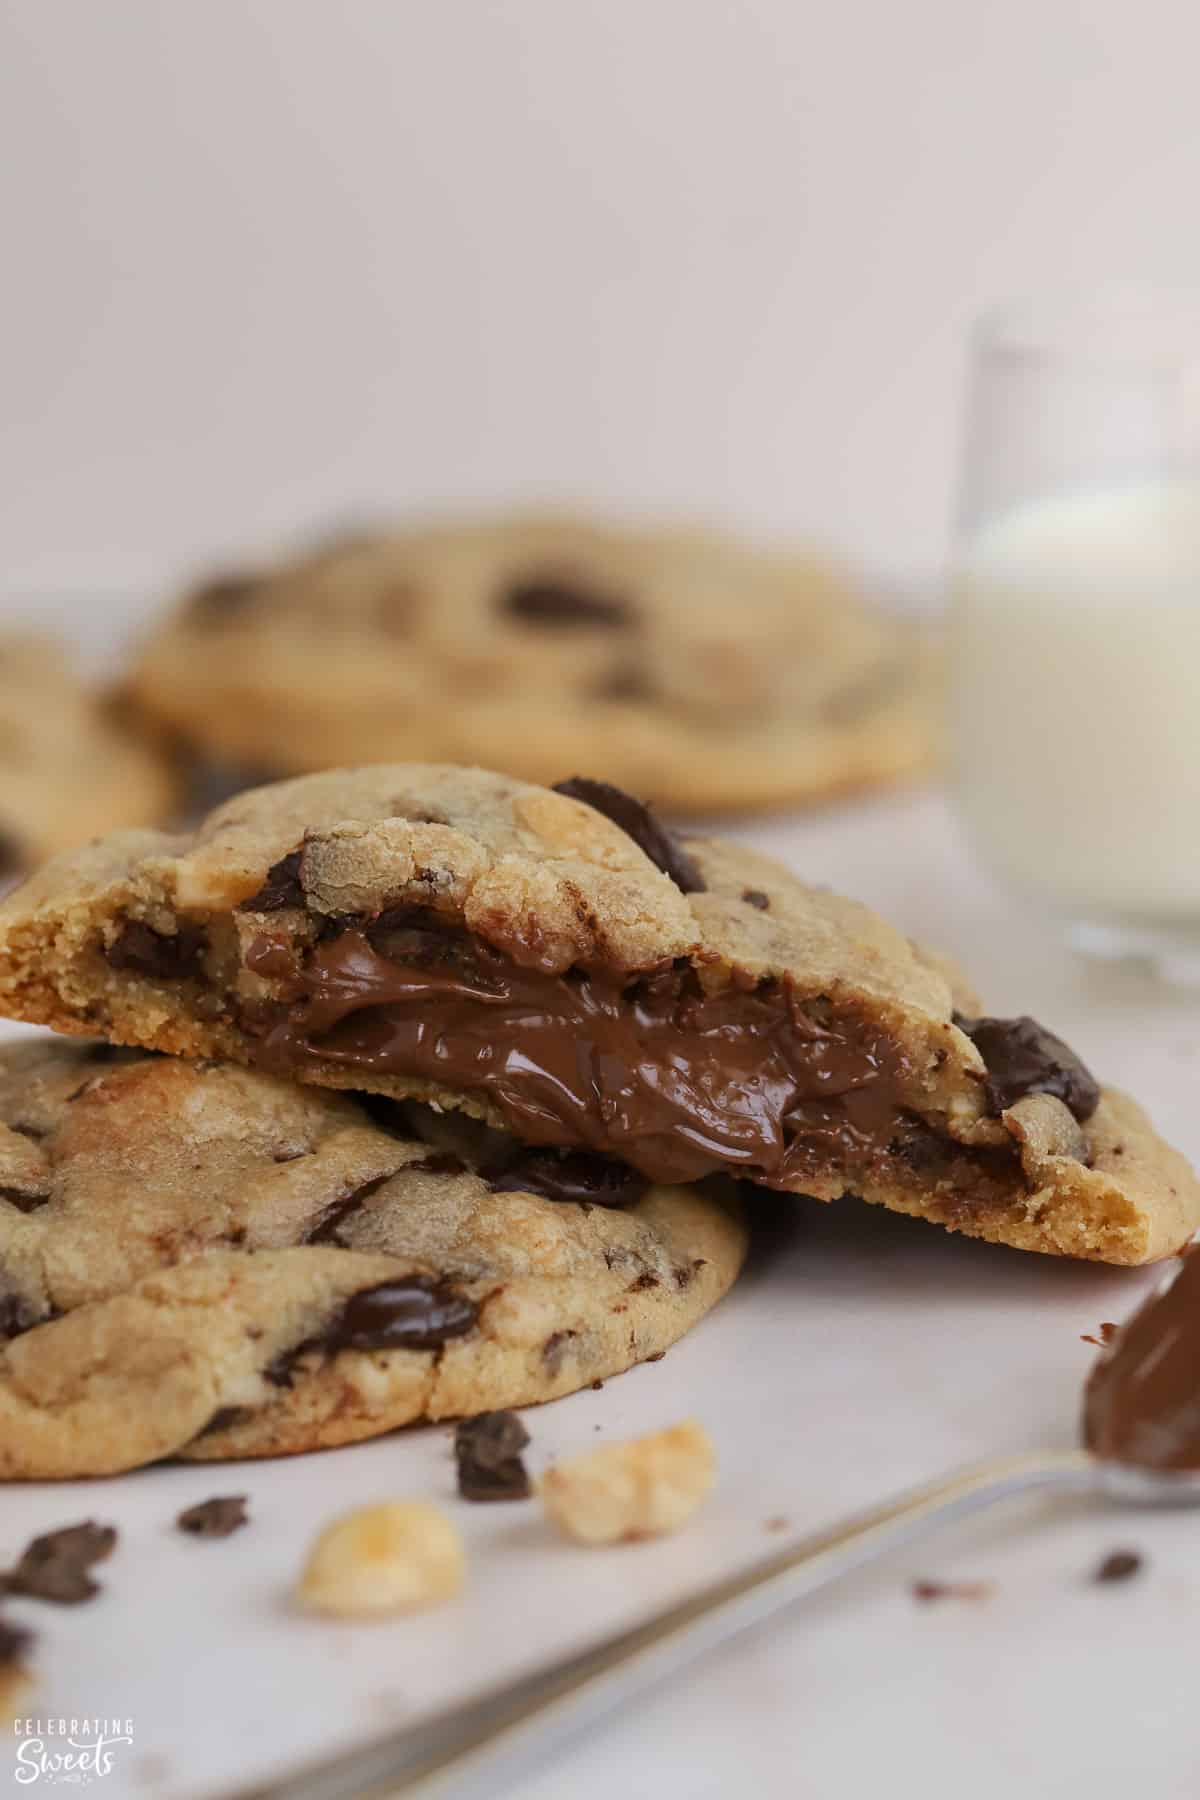 Cookie split open with Nutella filling inside.